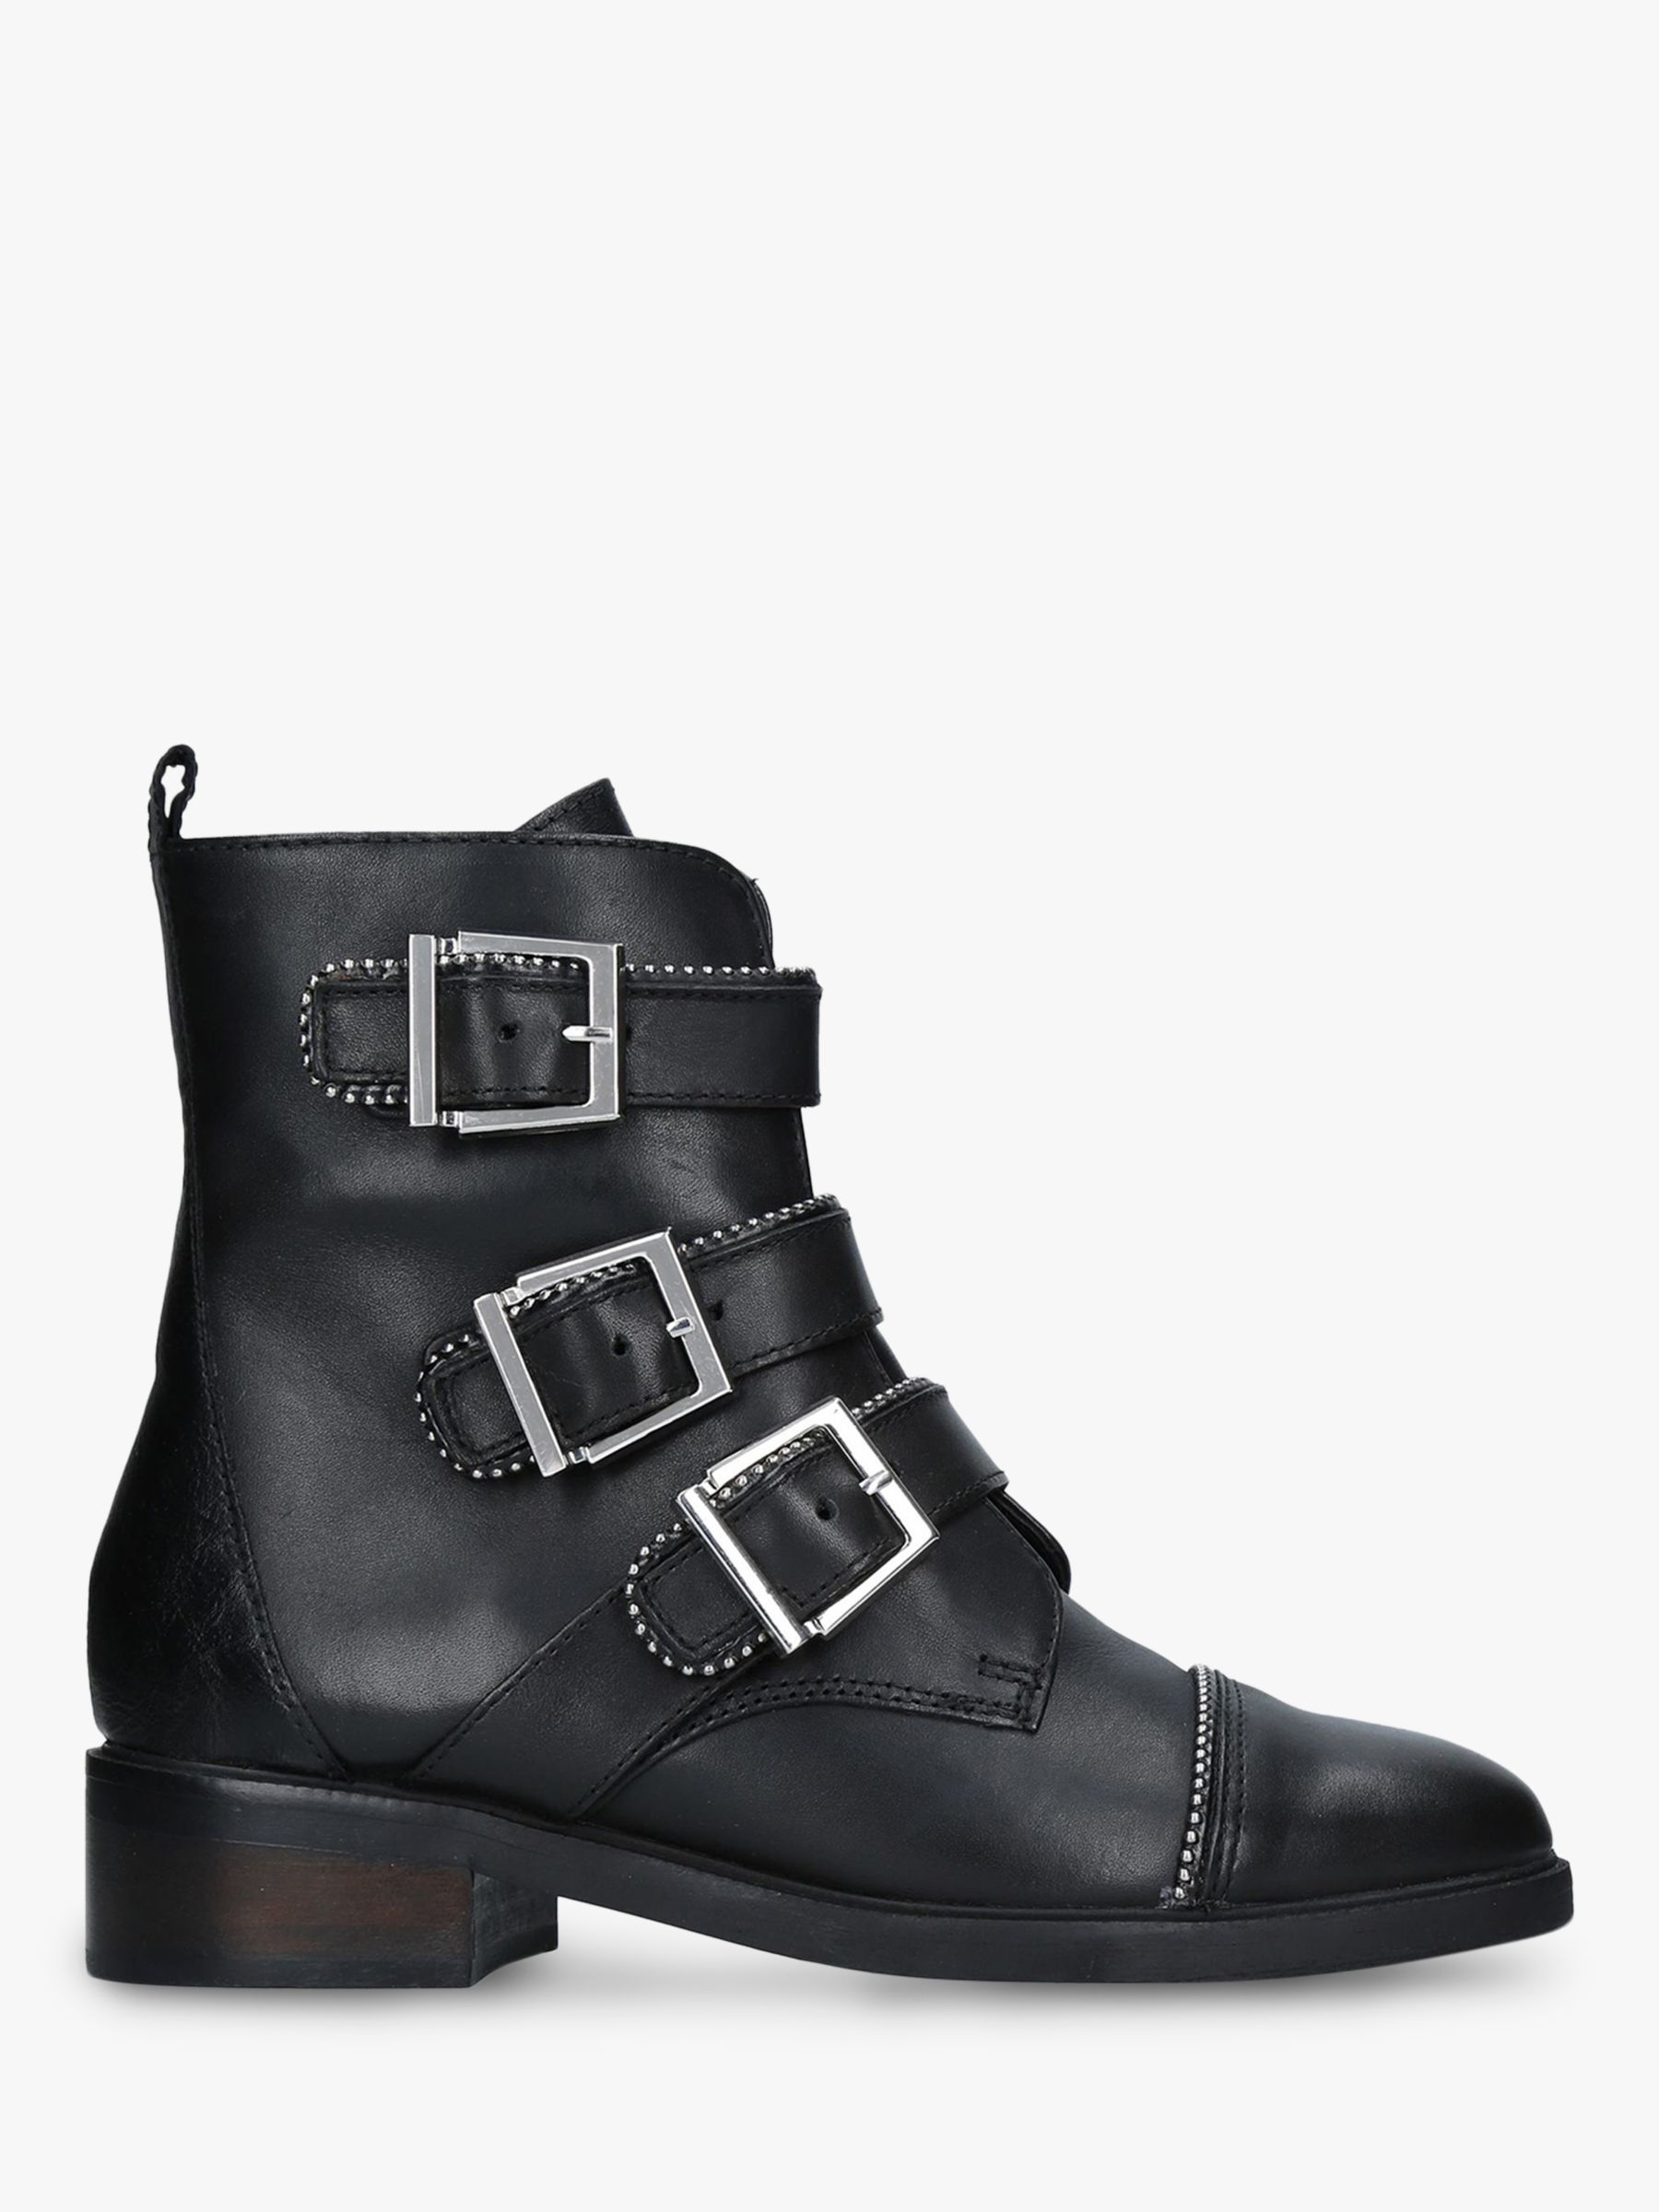 Carvela Sparse Triple Buckle Ankle Boots, Black Leather